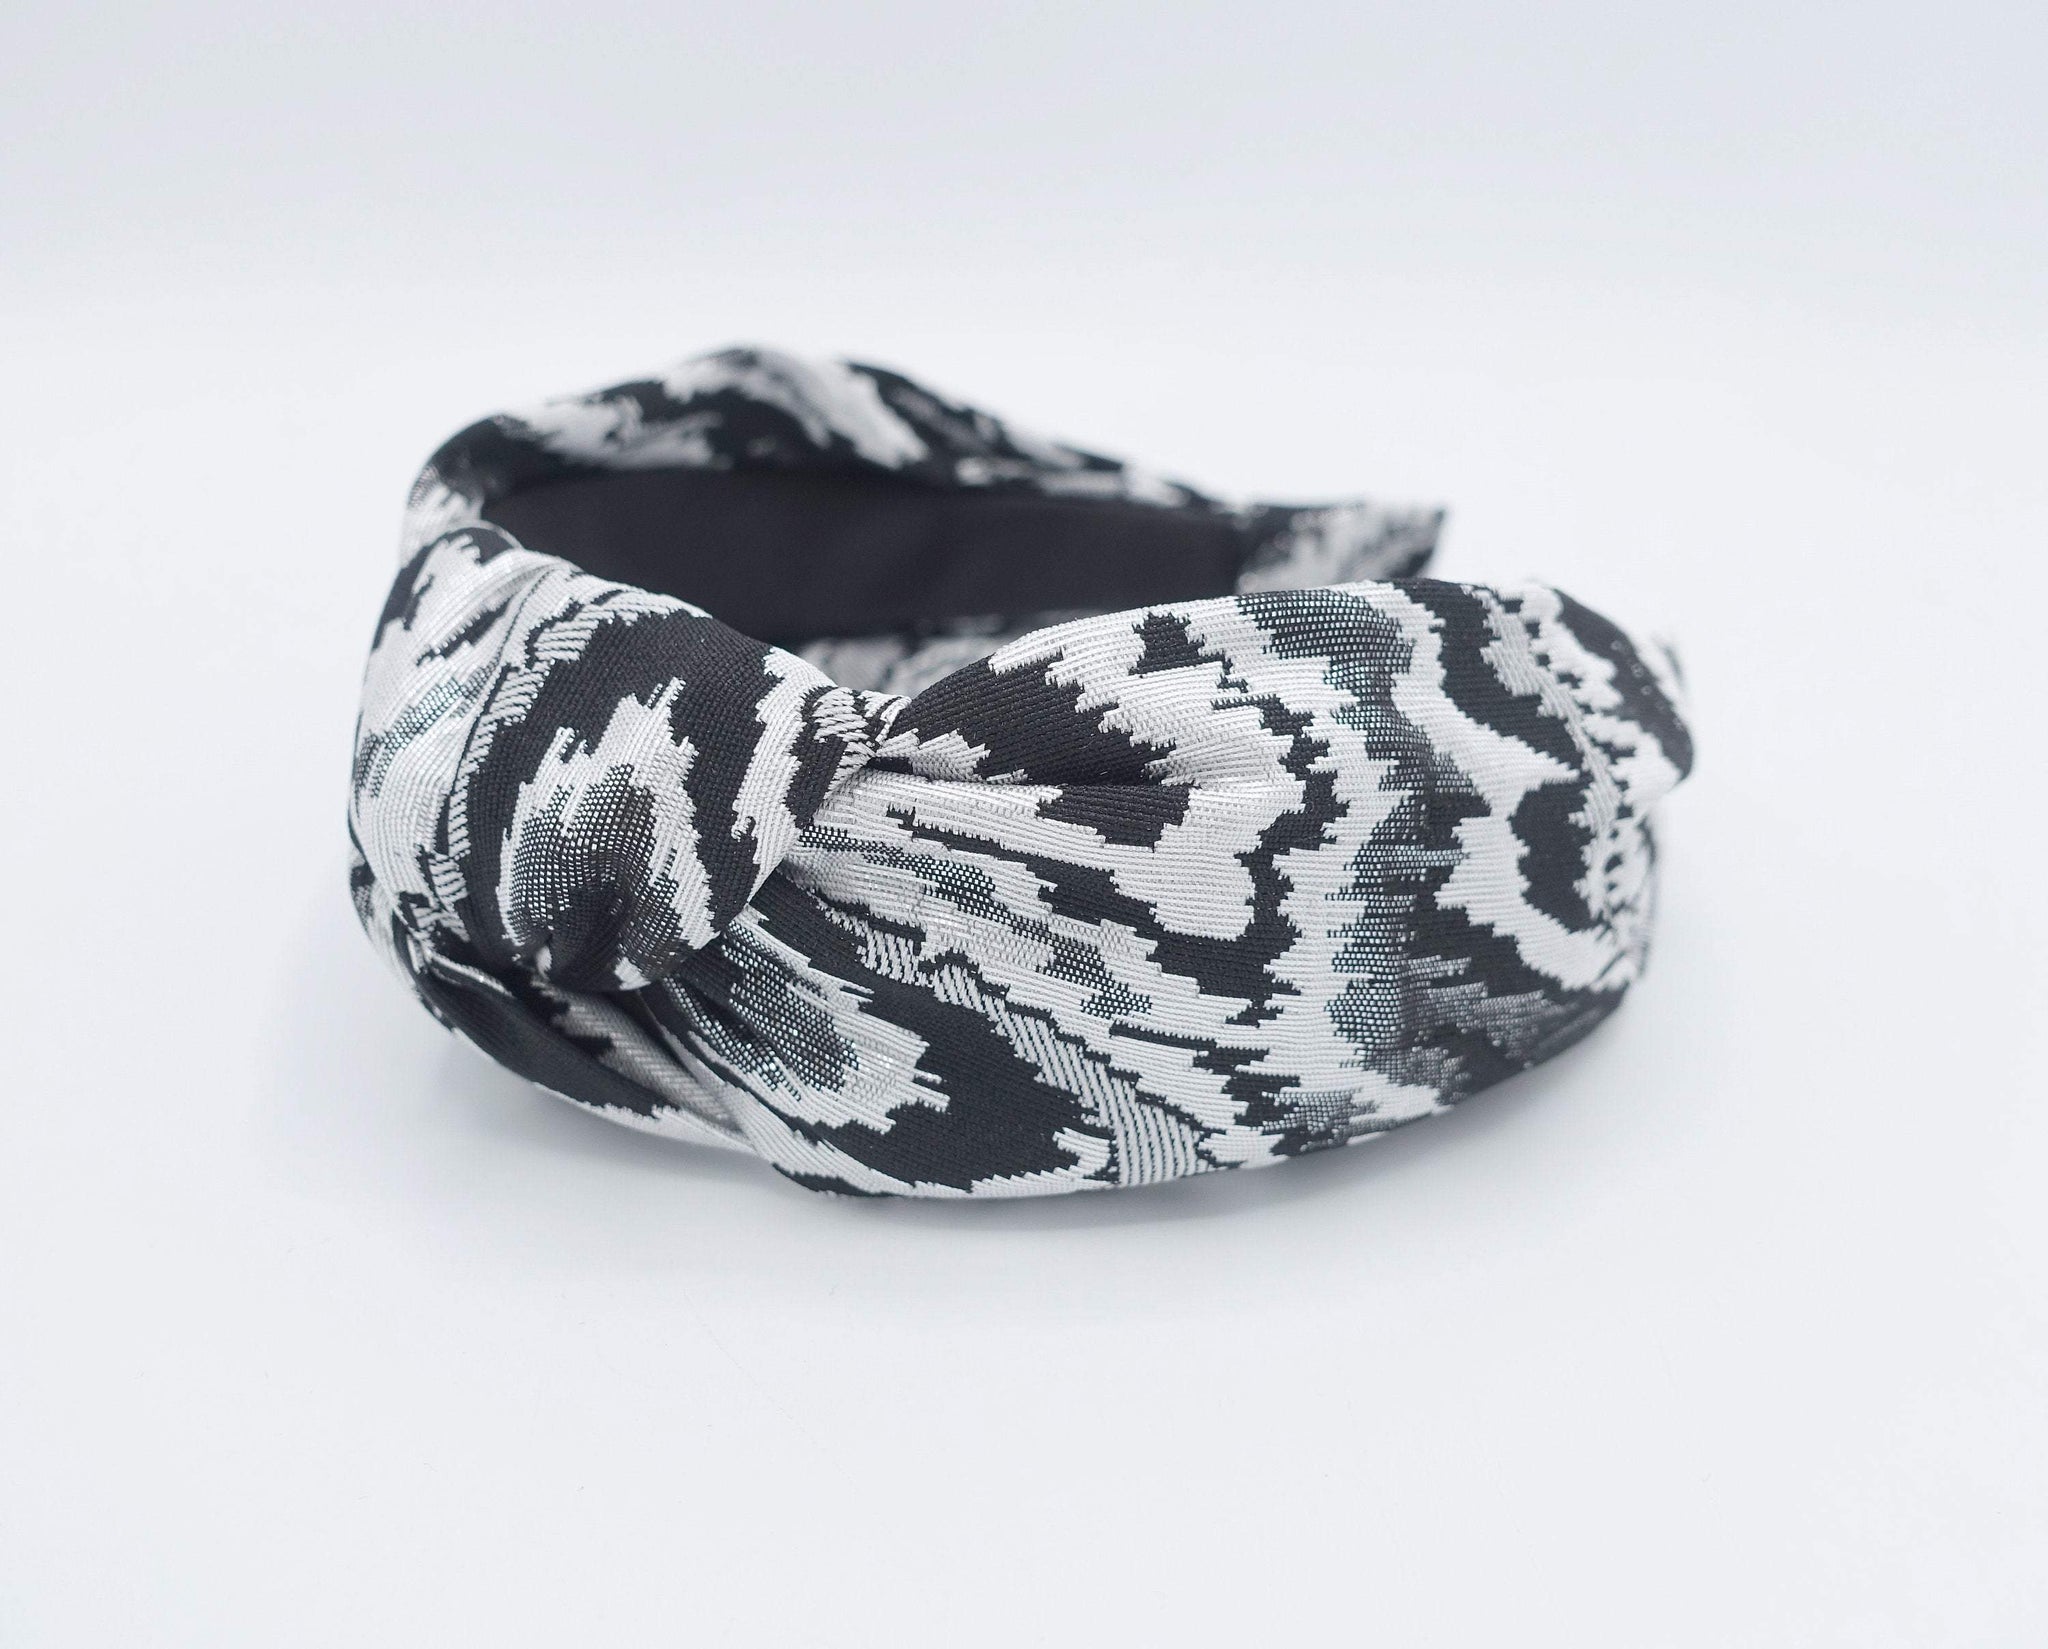 VeryShine Headband lame embroidered headband top knot wave hairband for women